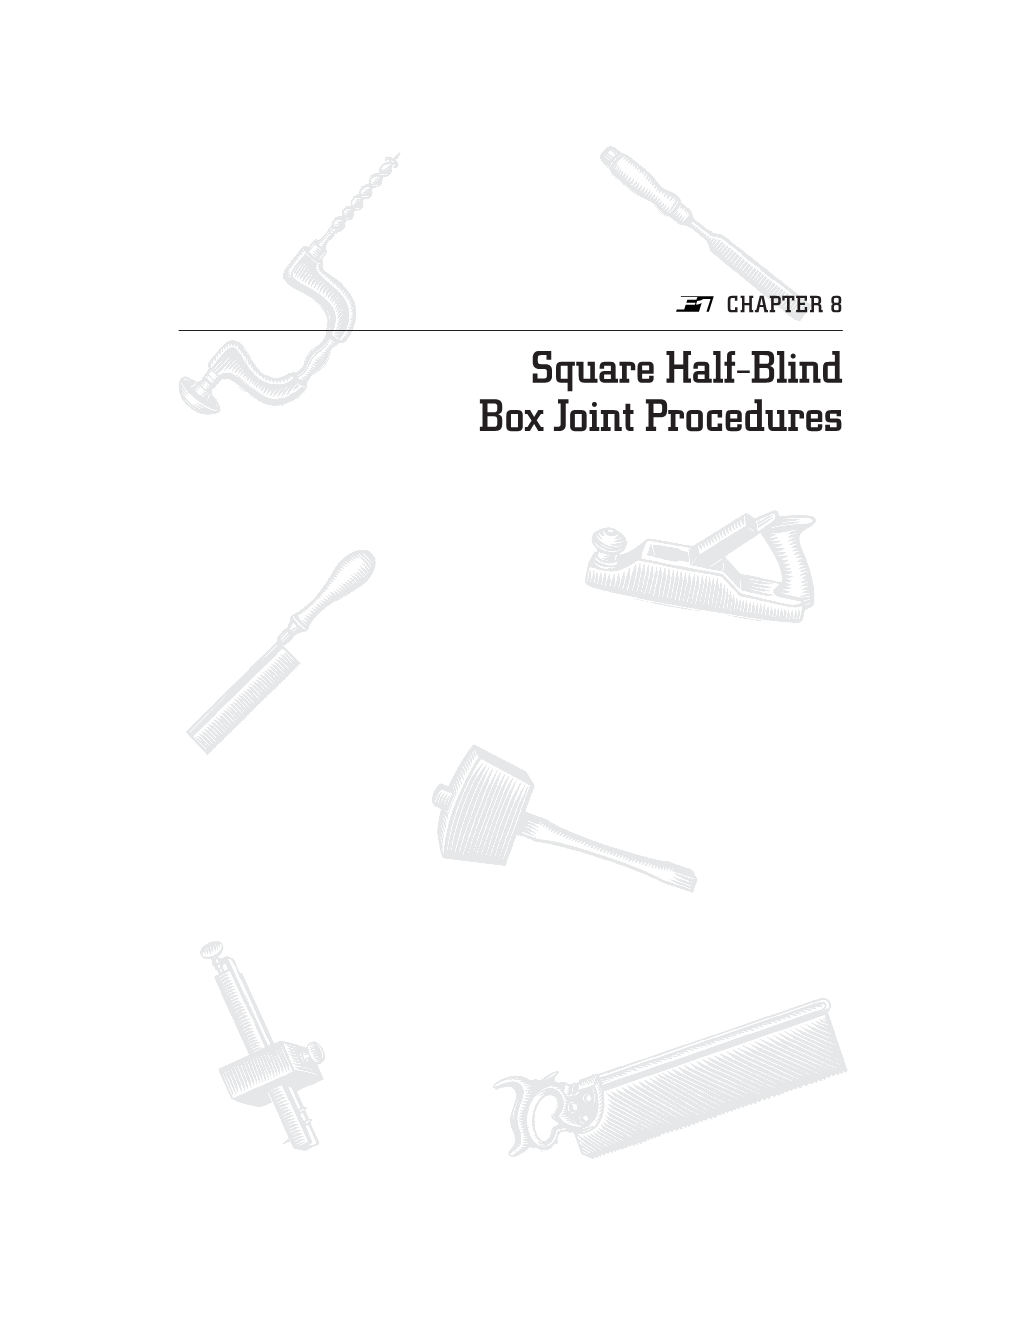 Square Half-Blind Box Joint Procedures 58 SQUARE HALF-BLIND BOX JOINT PROCEDURES Chapter 8 F1 User Guide 59